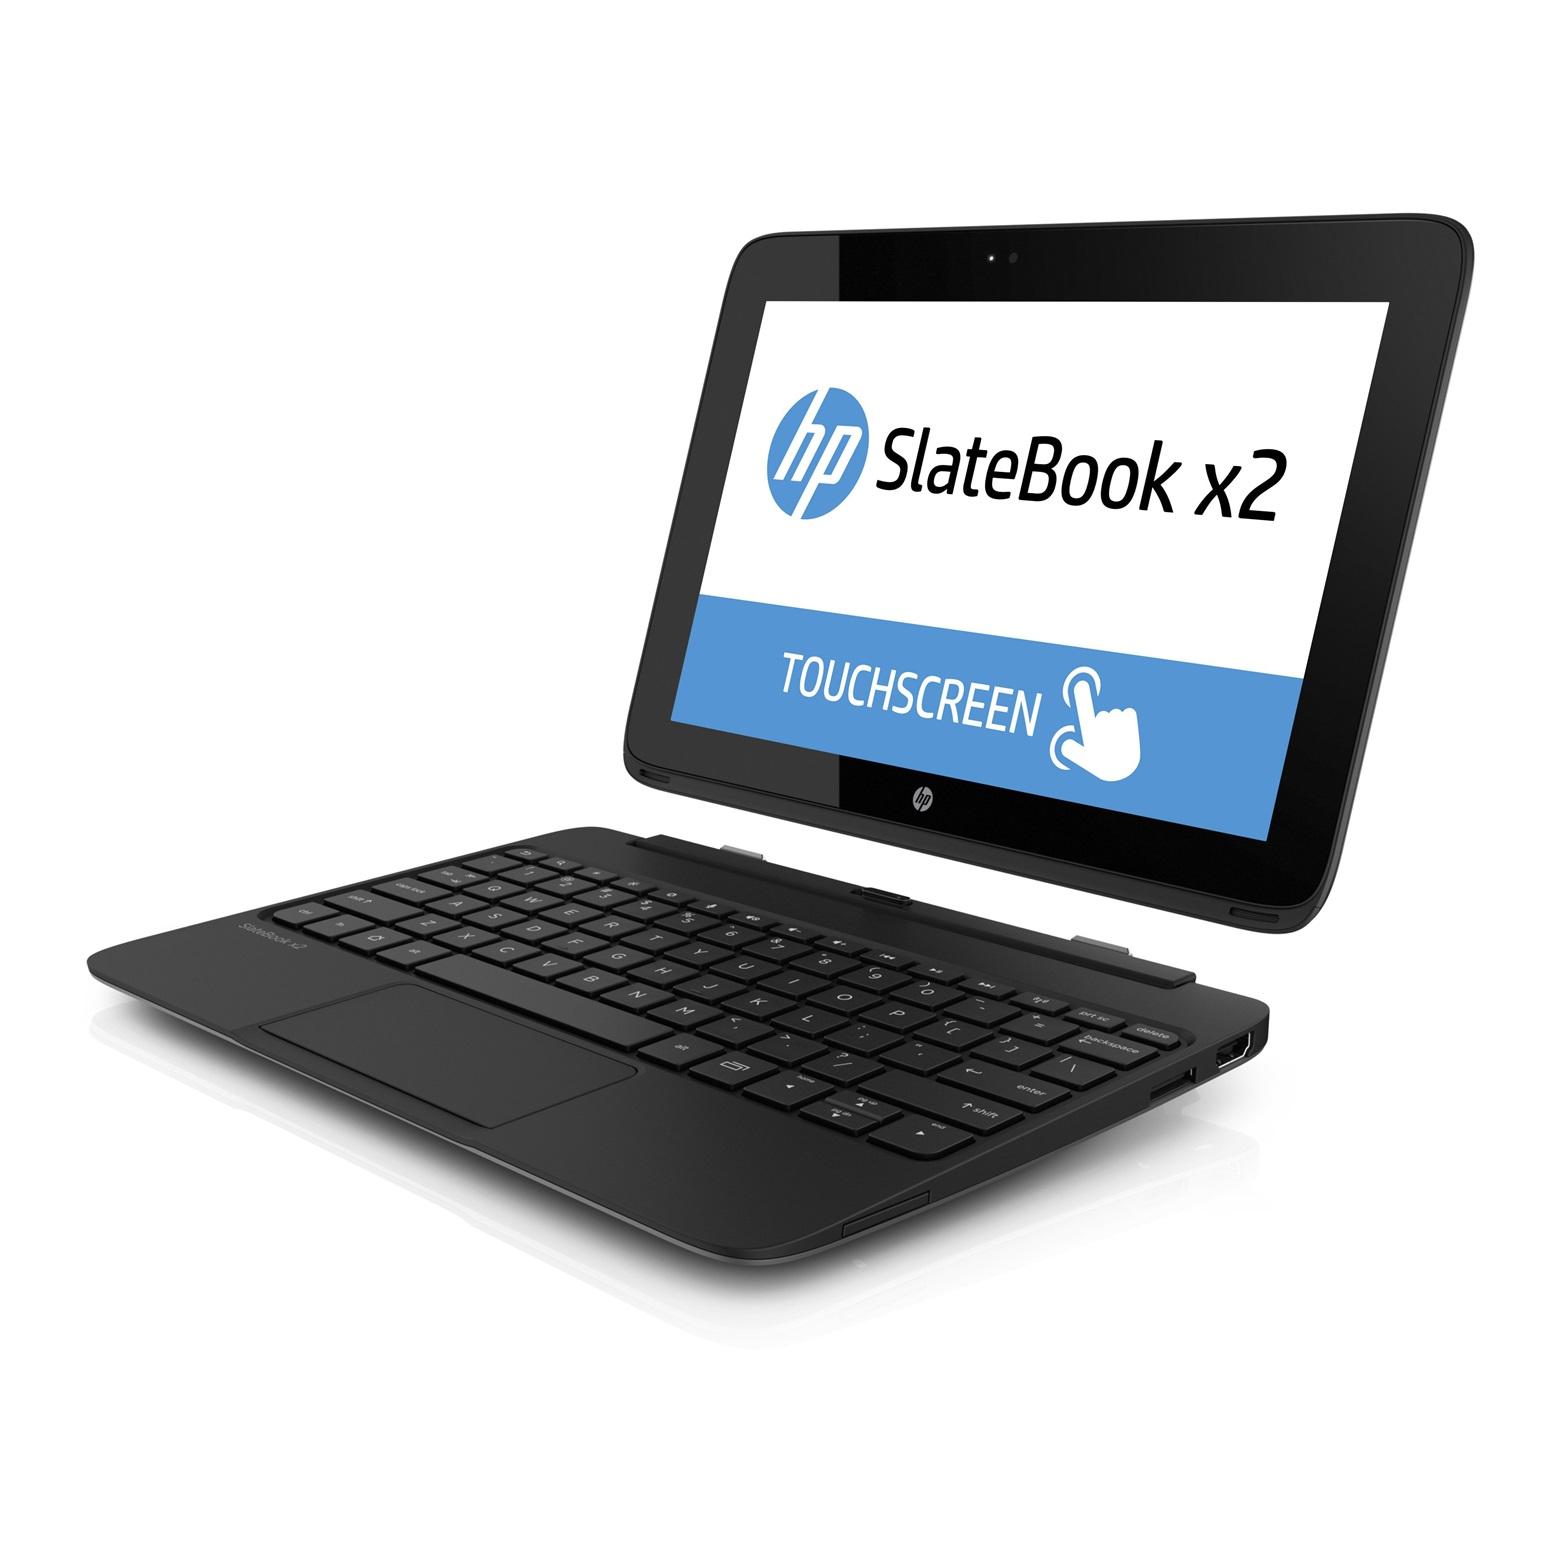 SlateBook 10-h000st x2 PC